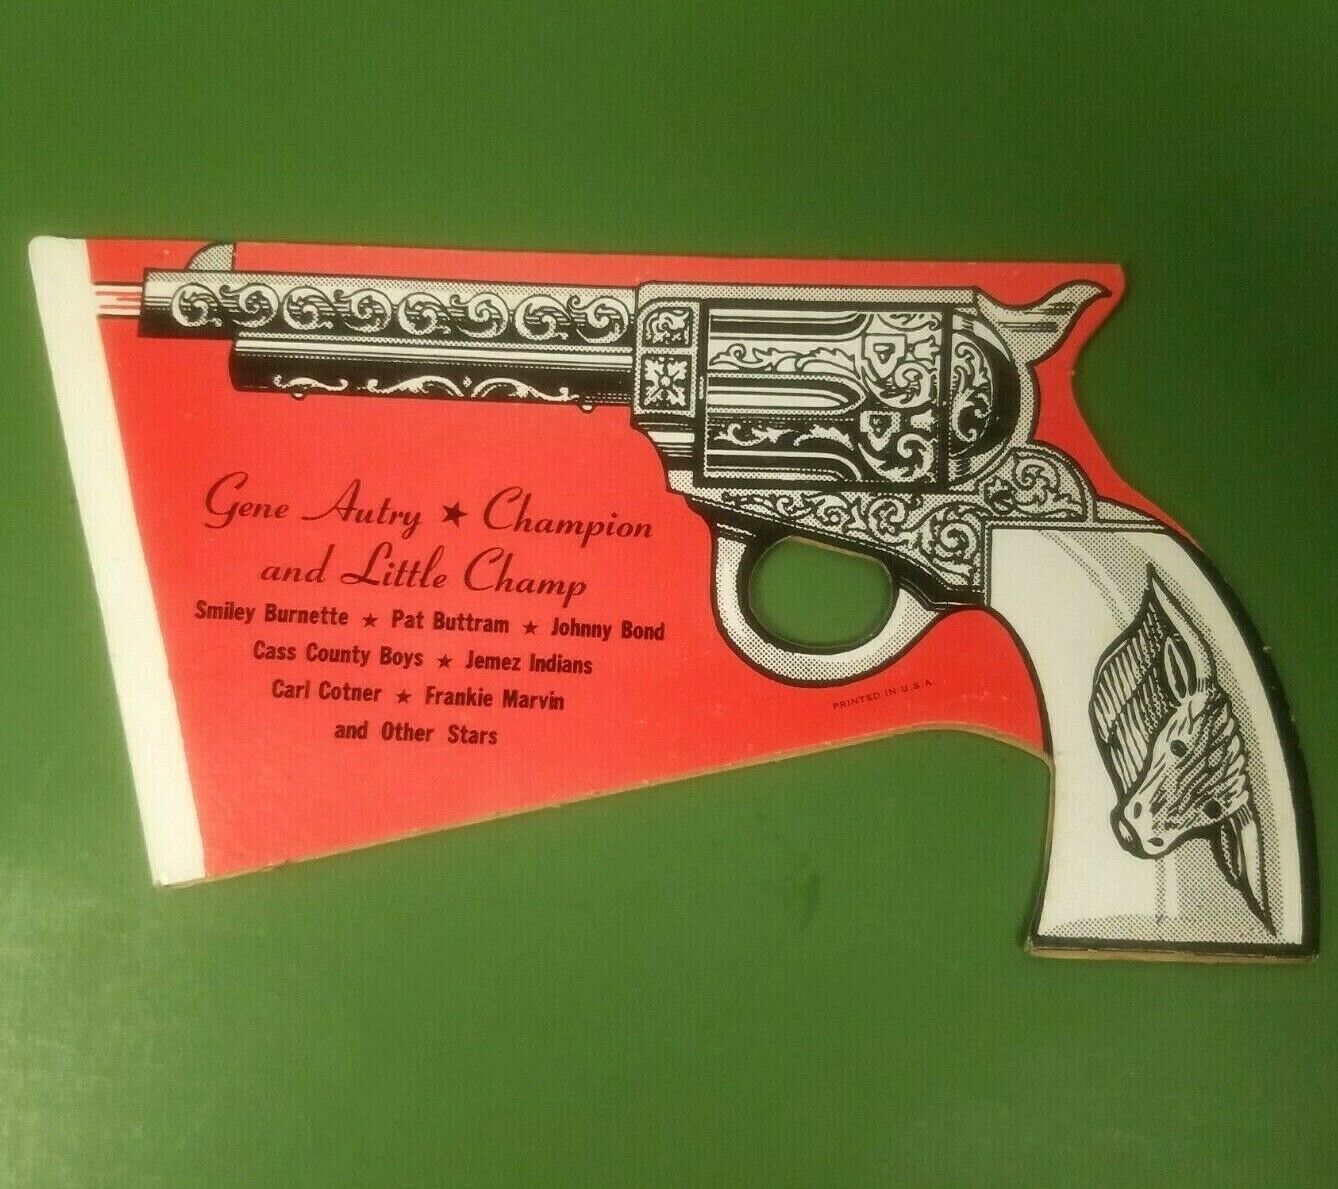 Gene Autry TV Show Display Advertisement Champion Little Champ Revolver Vintage